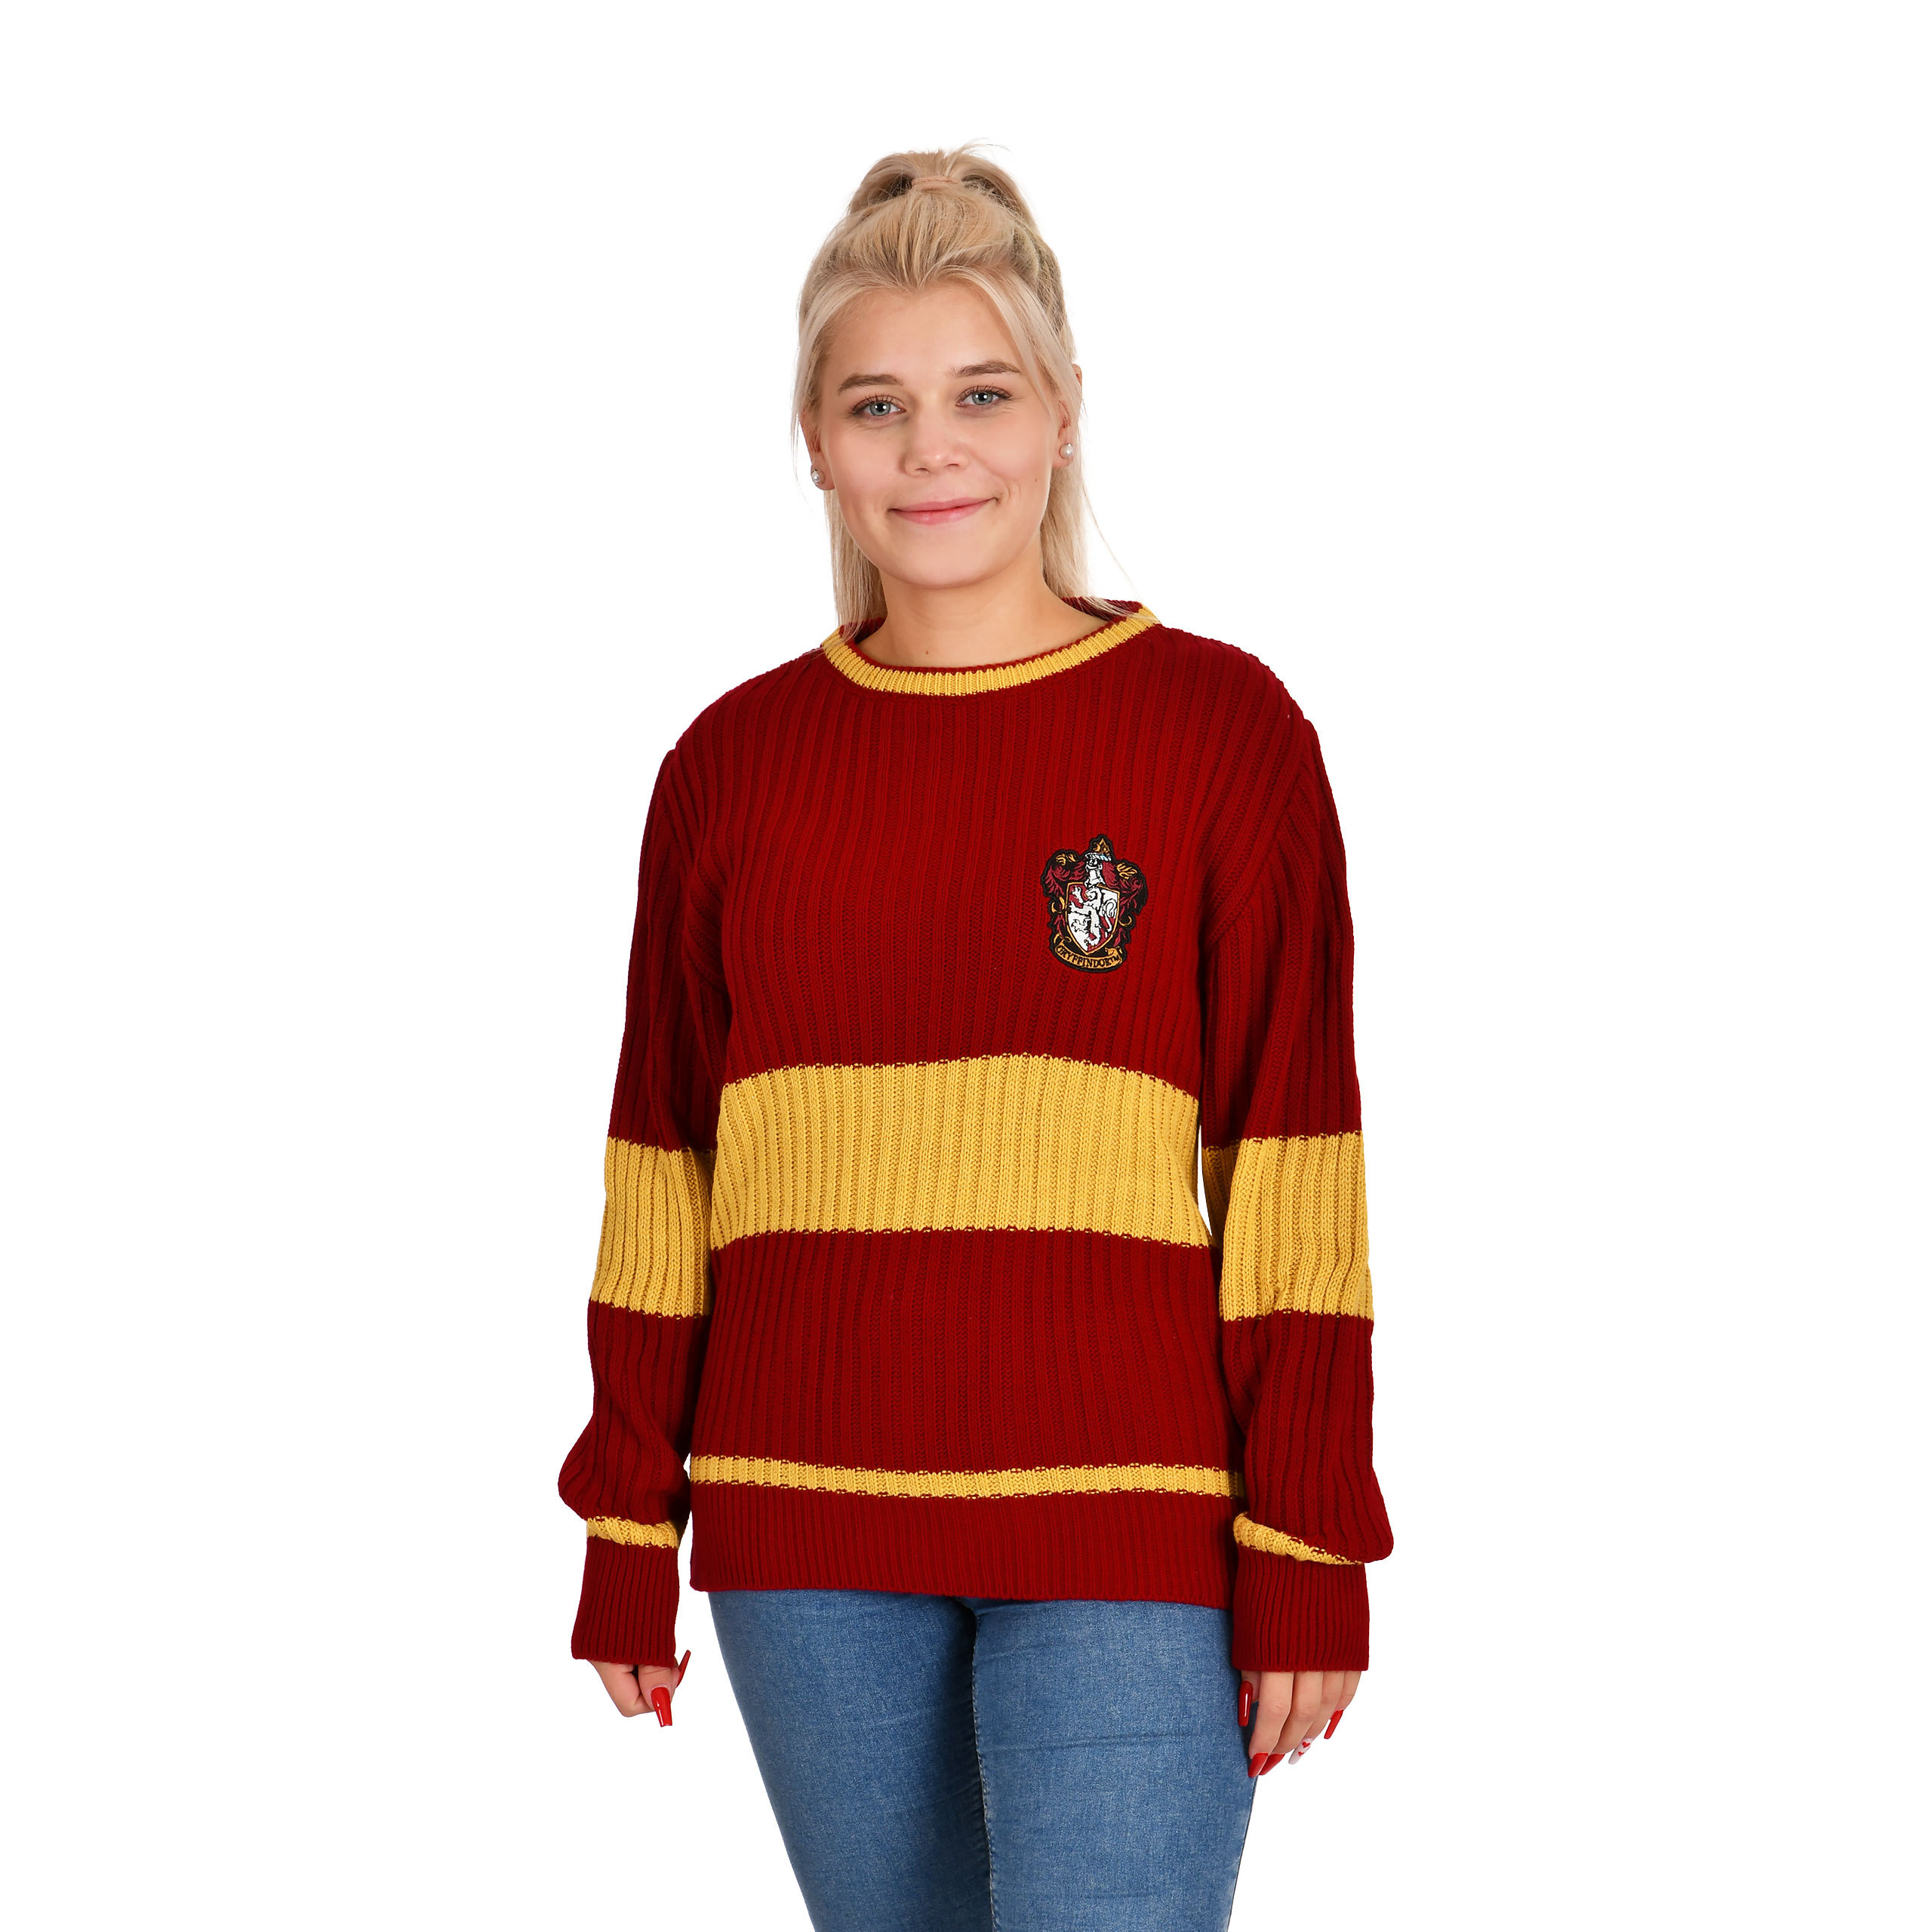 Gryffindor Knit Sweater - Harry Potter